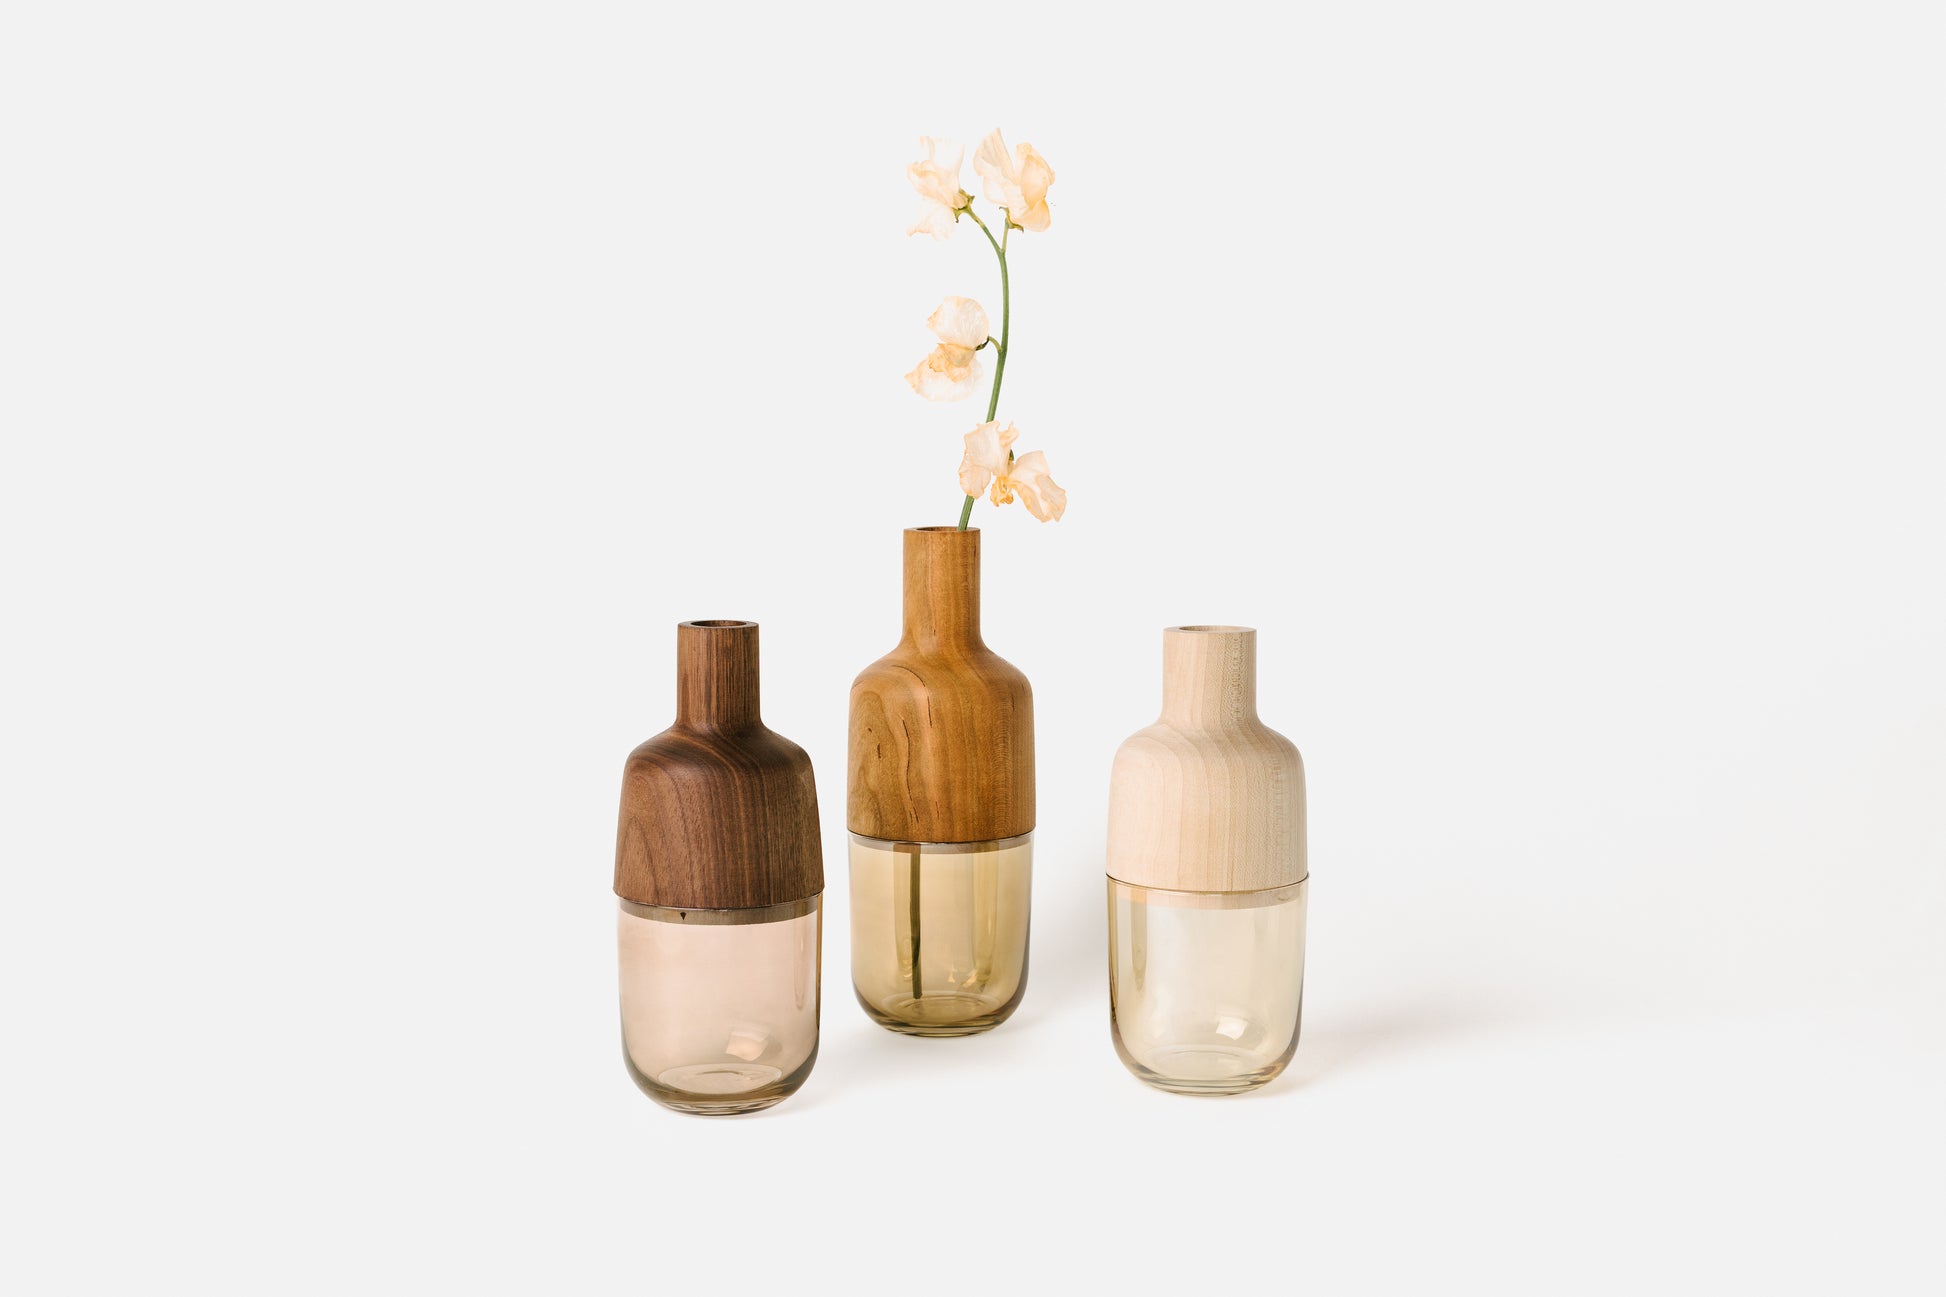 Hardwood and glass Marais Vases. From left to right: Indira, Maya, Greta | Melanie Abrantes Designs